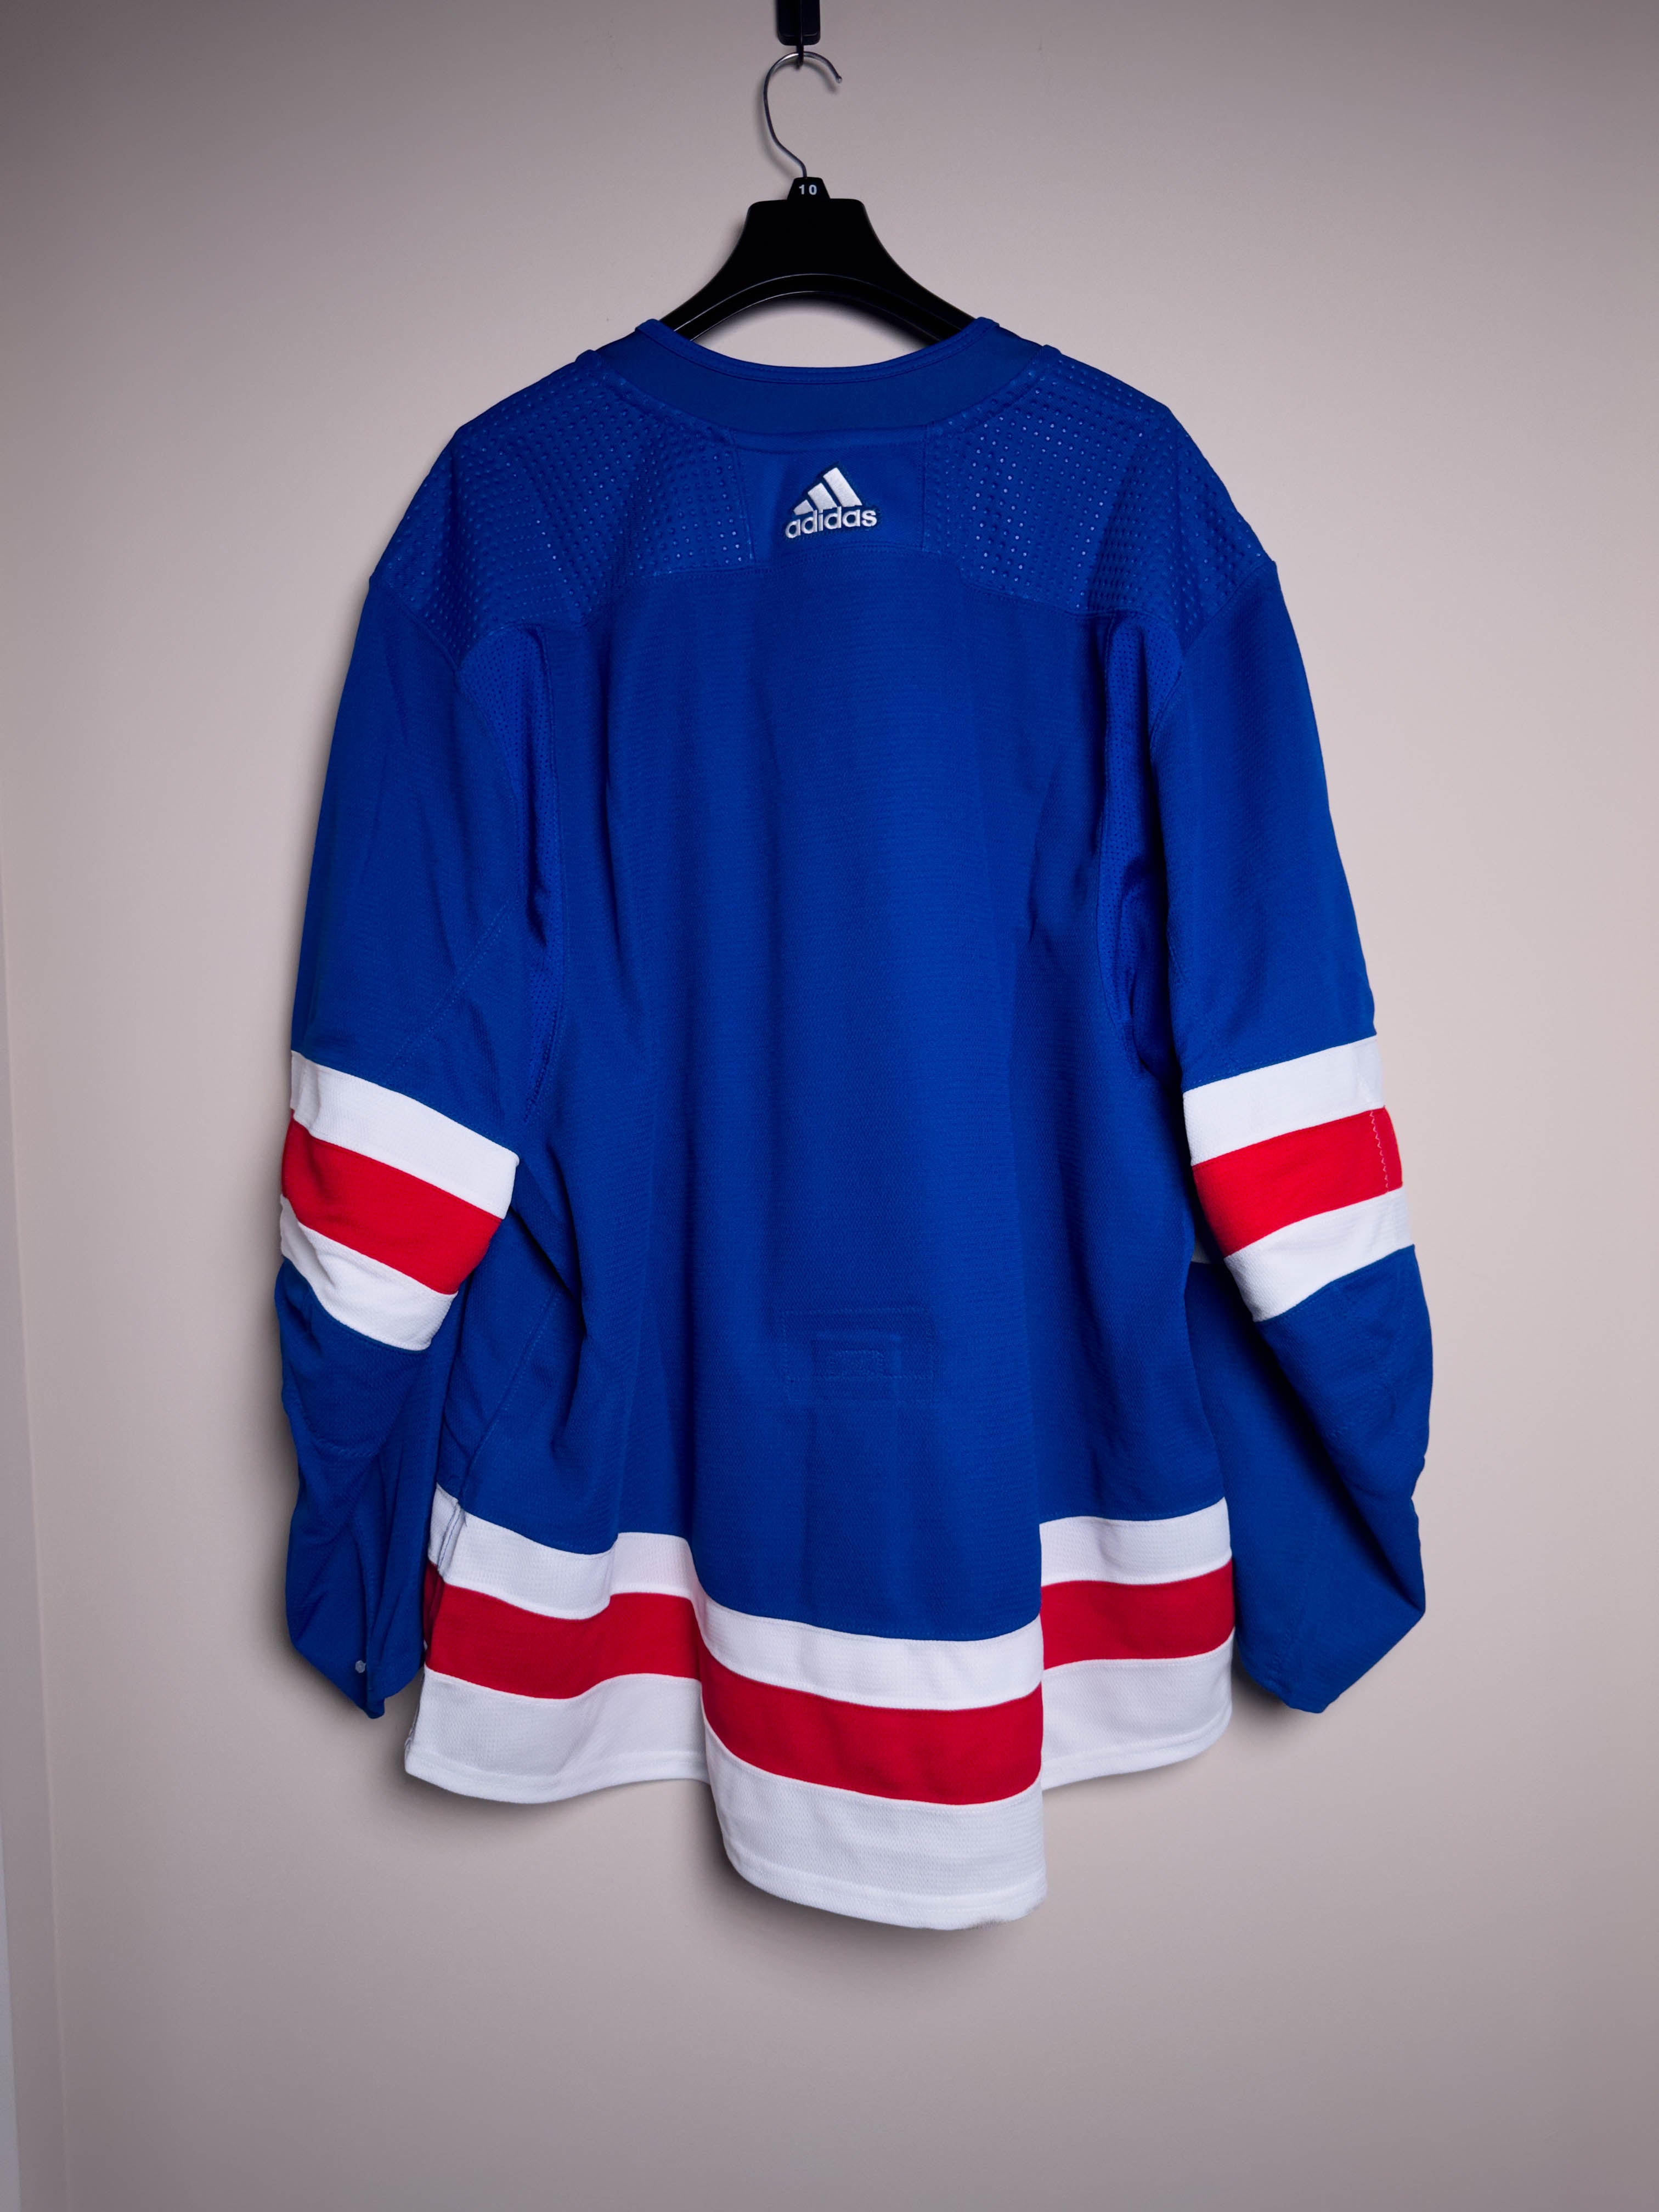 New York Rangers adidas Vintage Pro Jersey